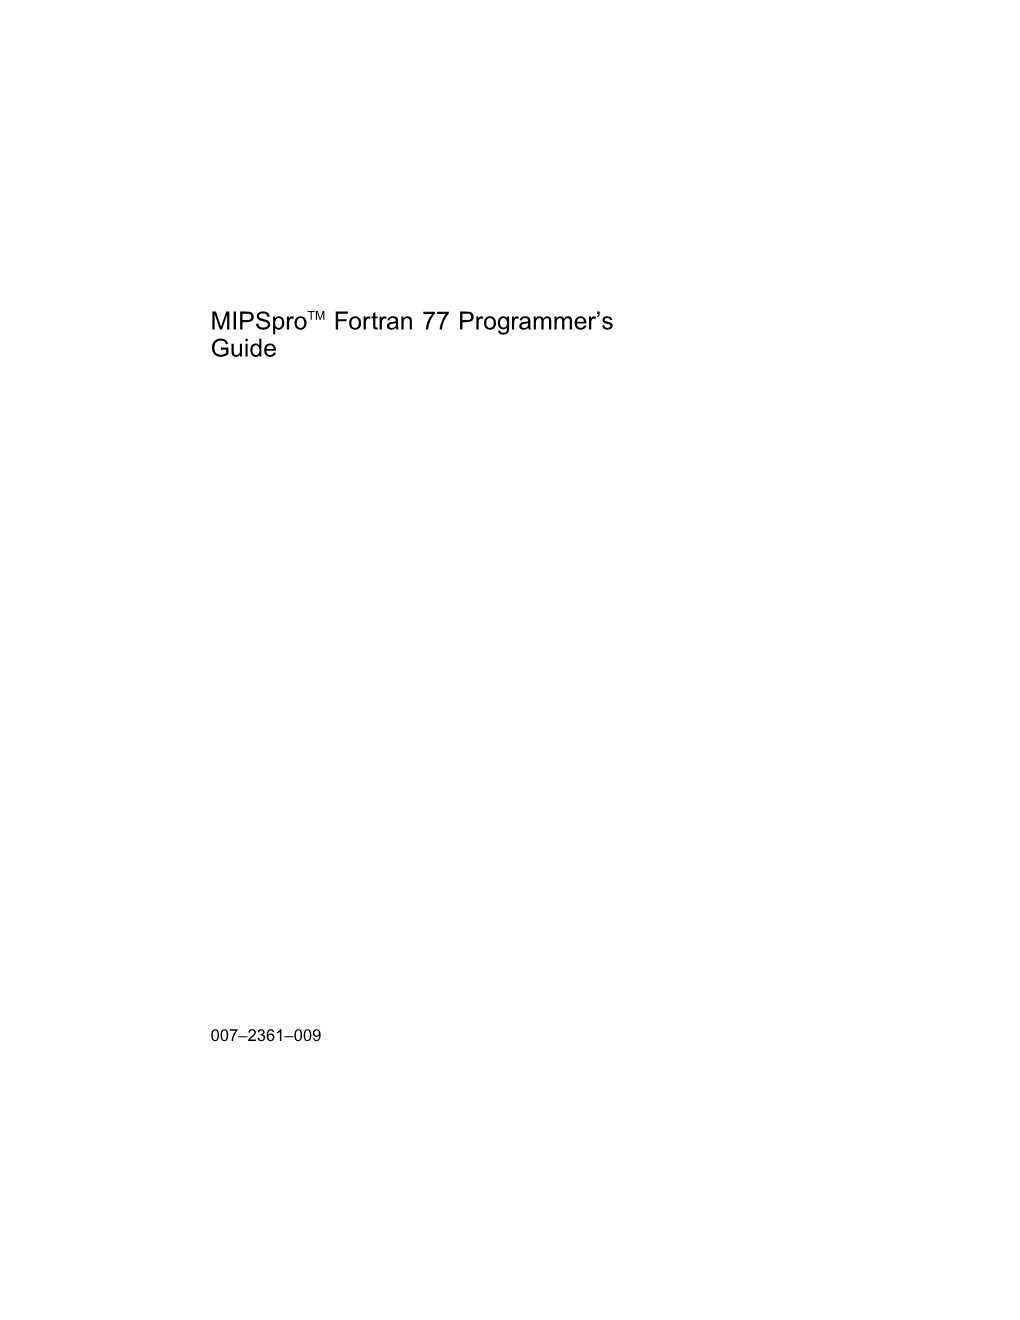 Mipsprotm Fortran 77 Programmer's Guide